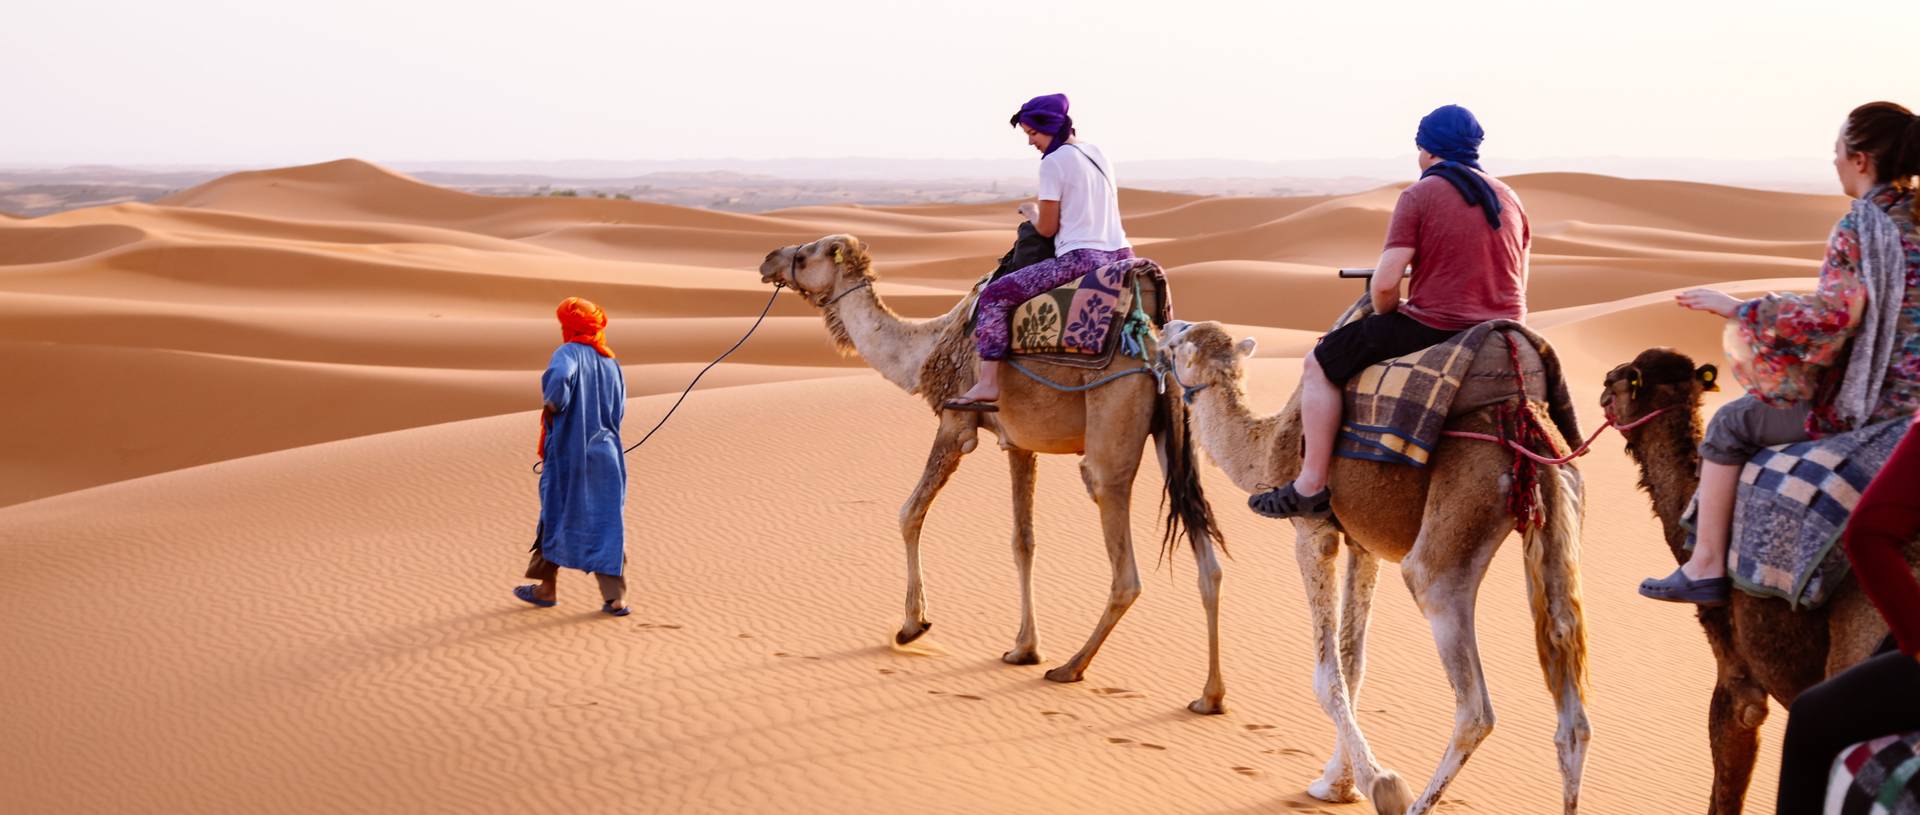 Camel Safari out in the sahara desert.jpg